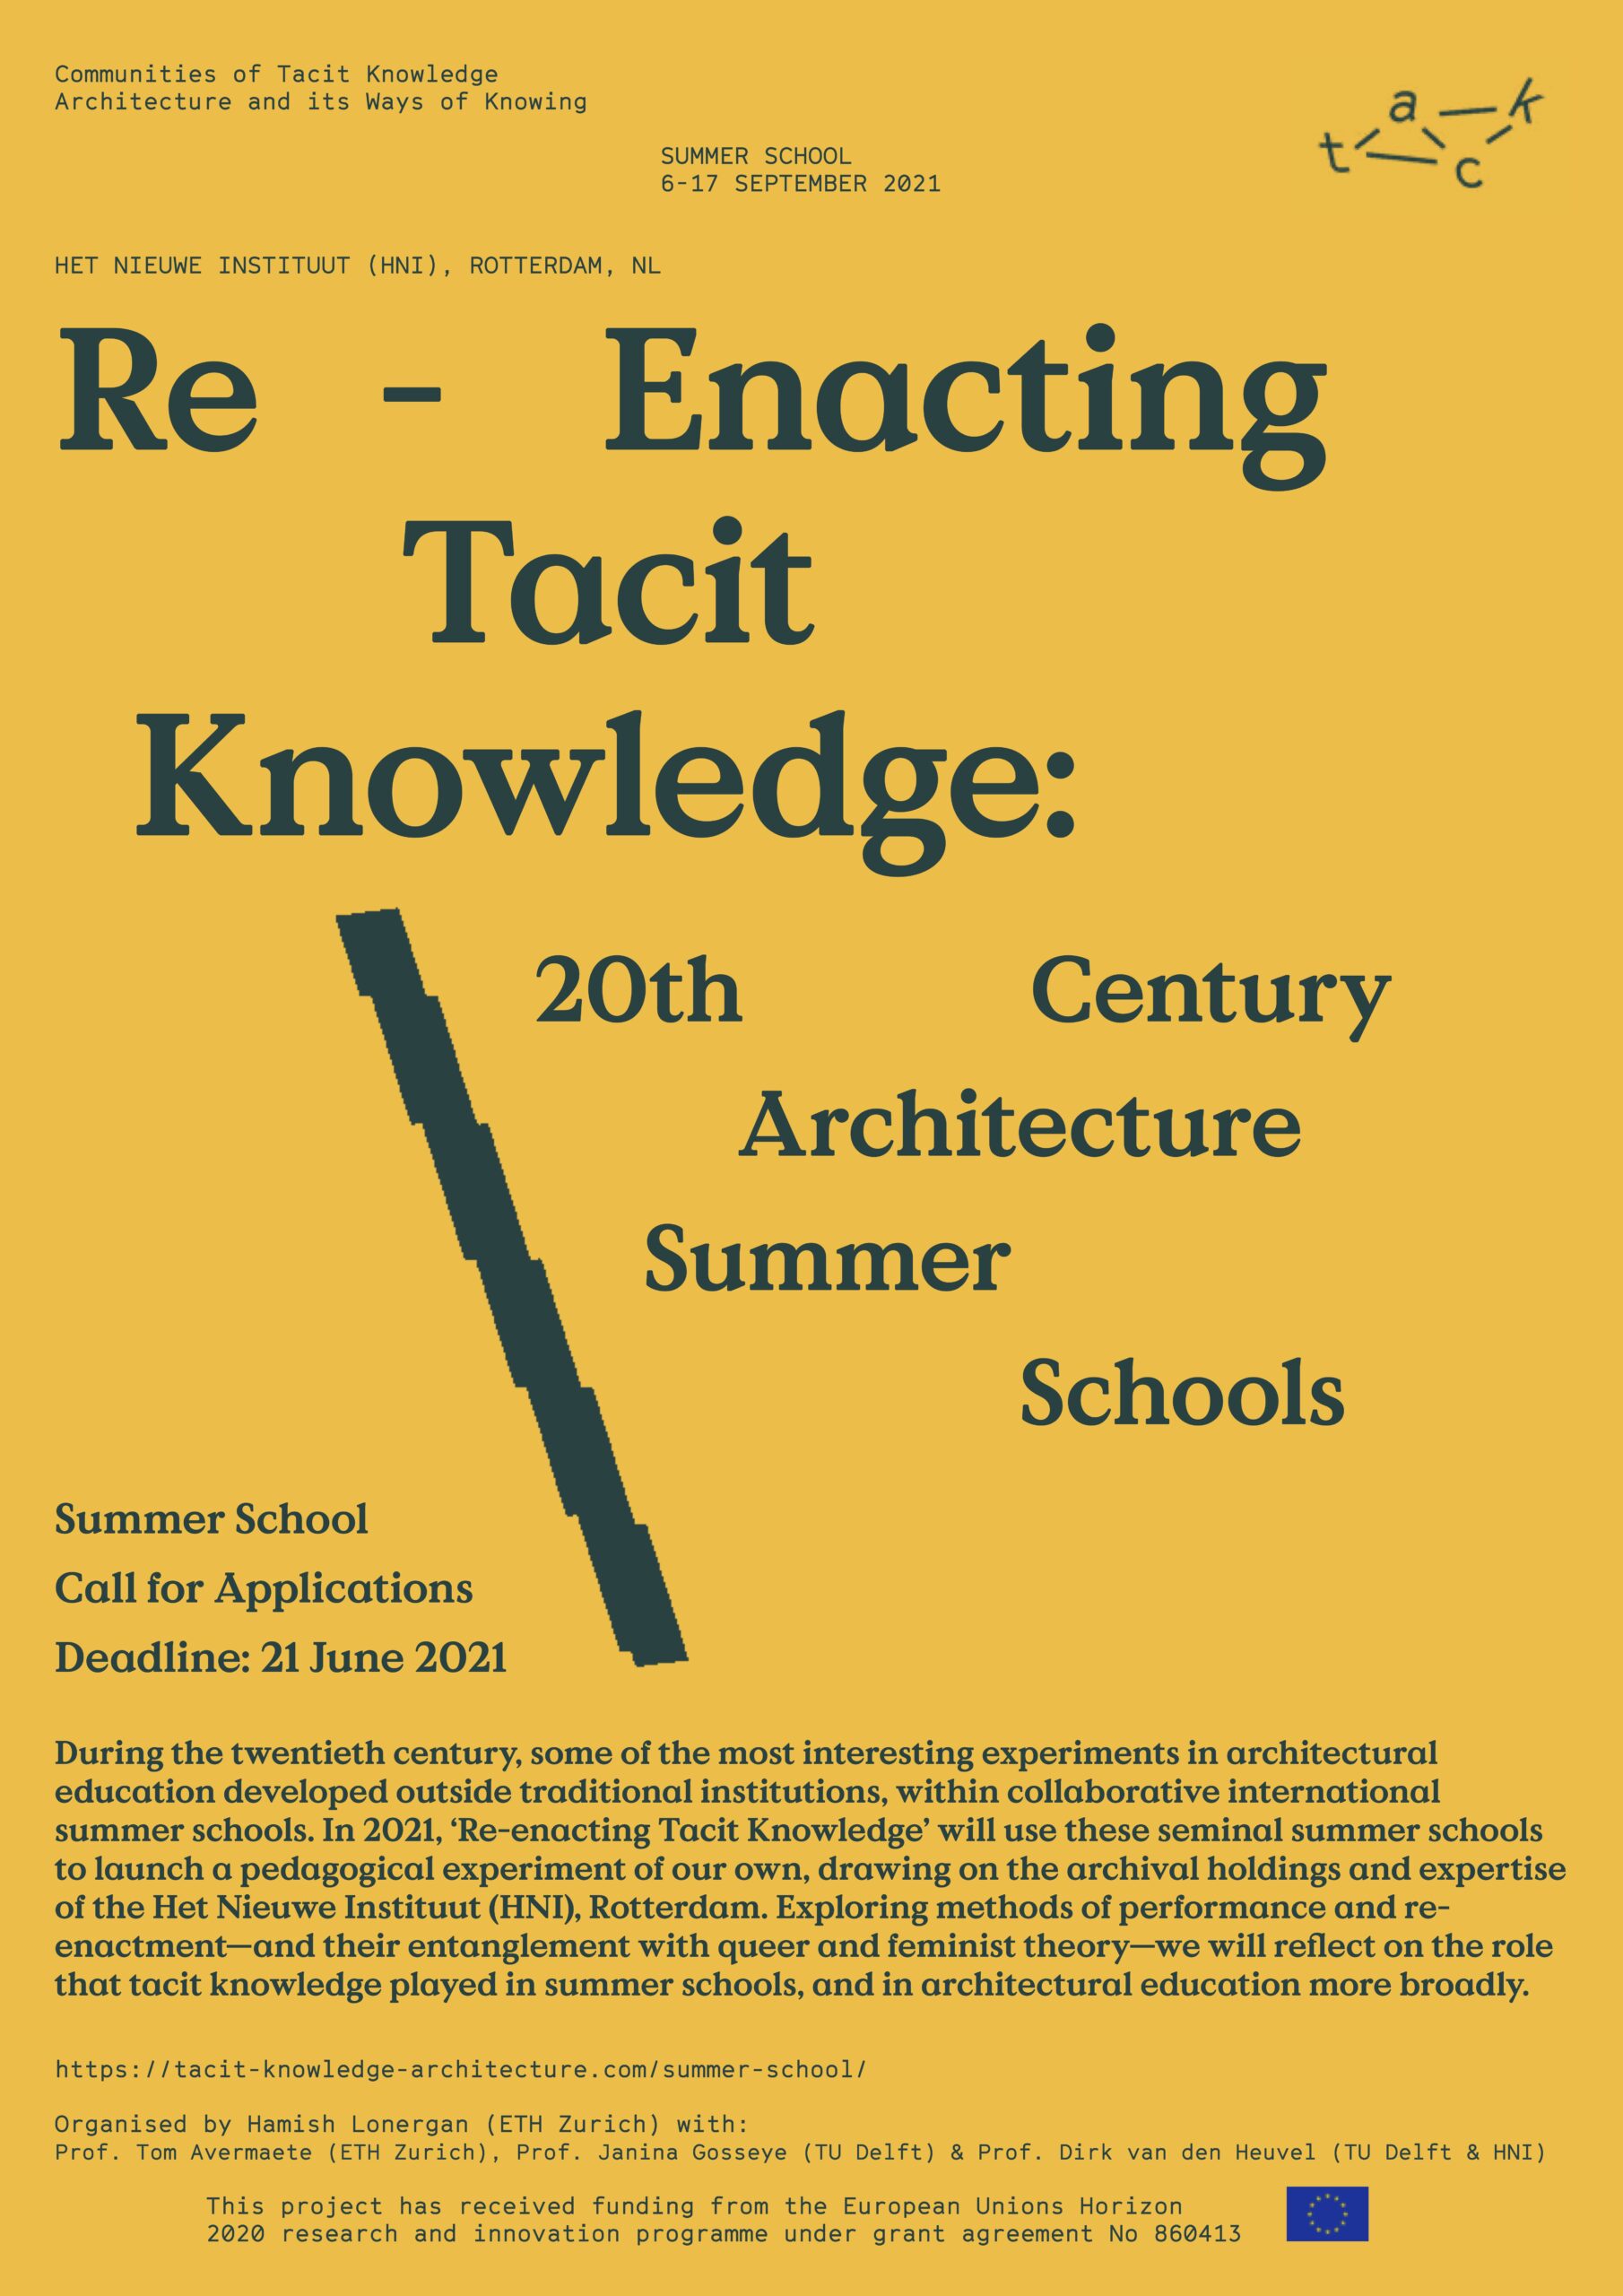 Re-Enacting Tacit Knowledge: 20th Century Architecture Summer Schools